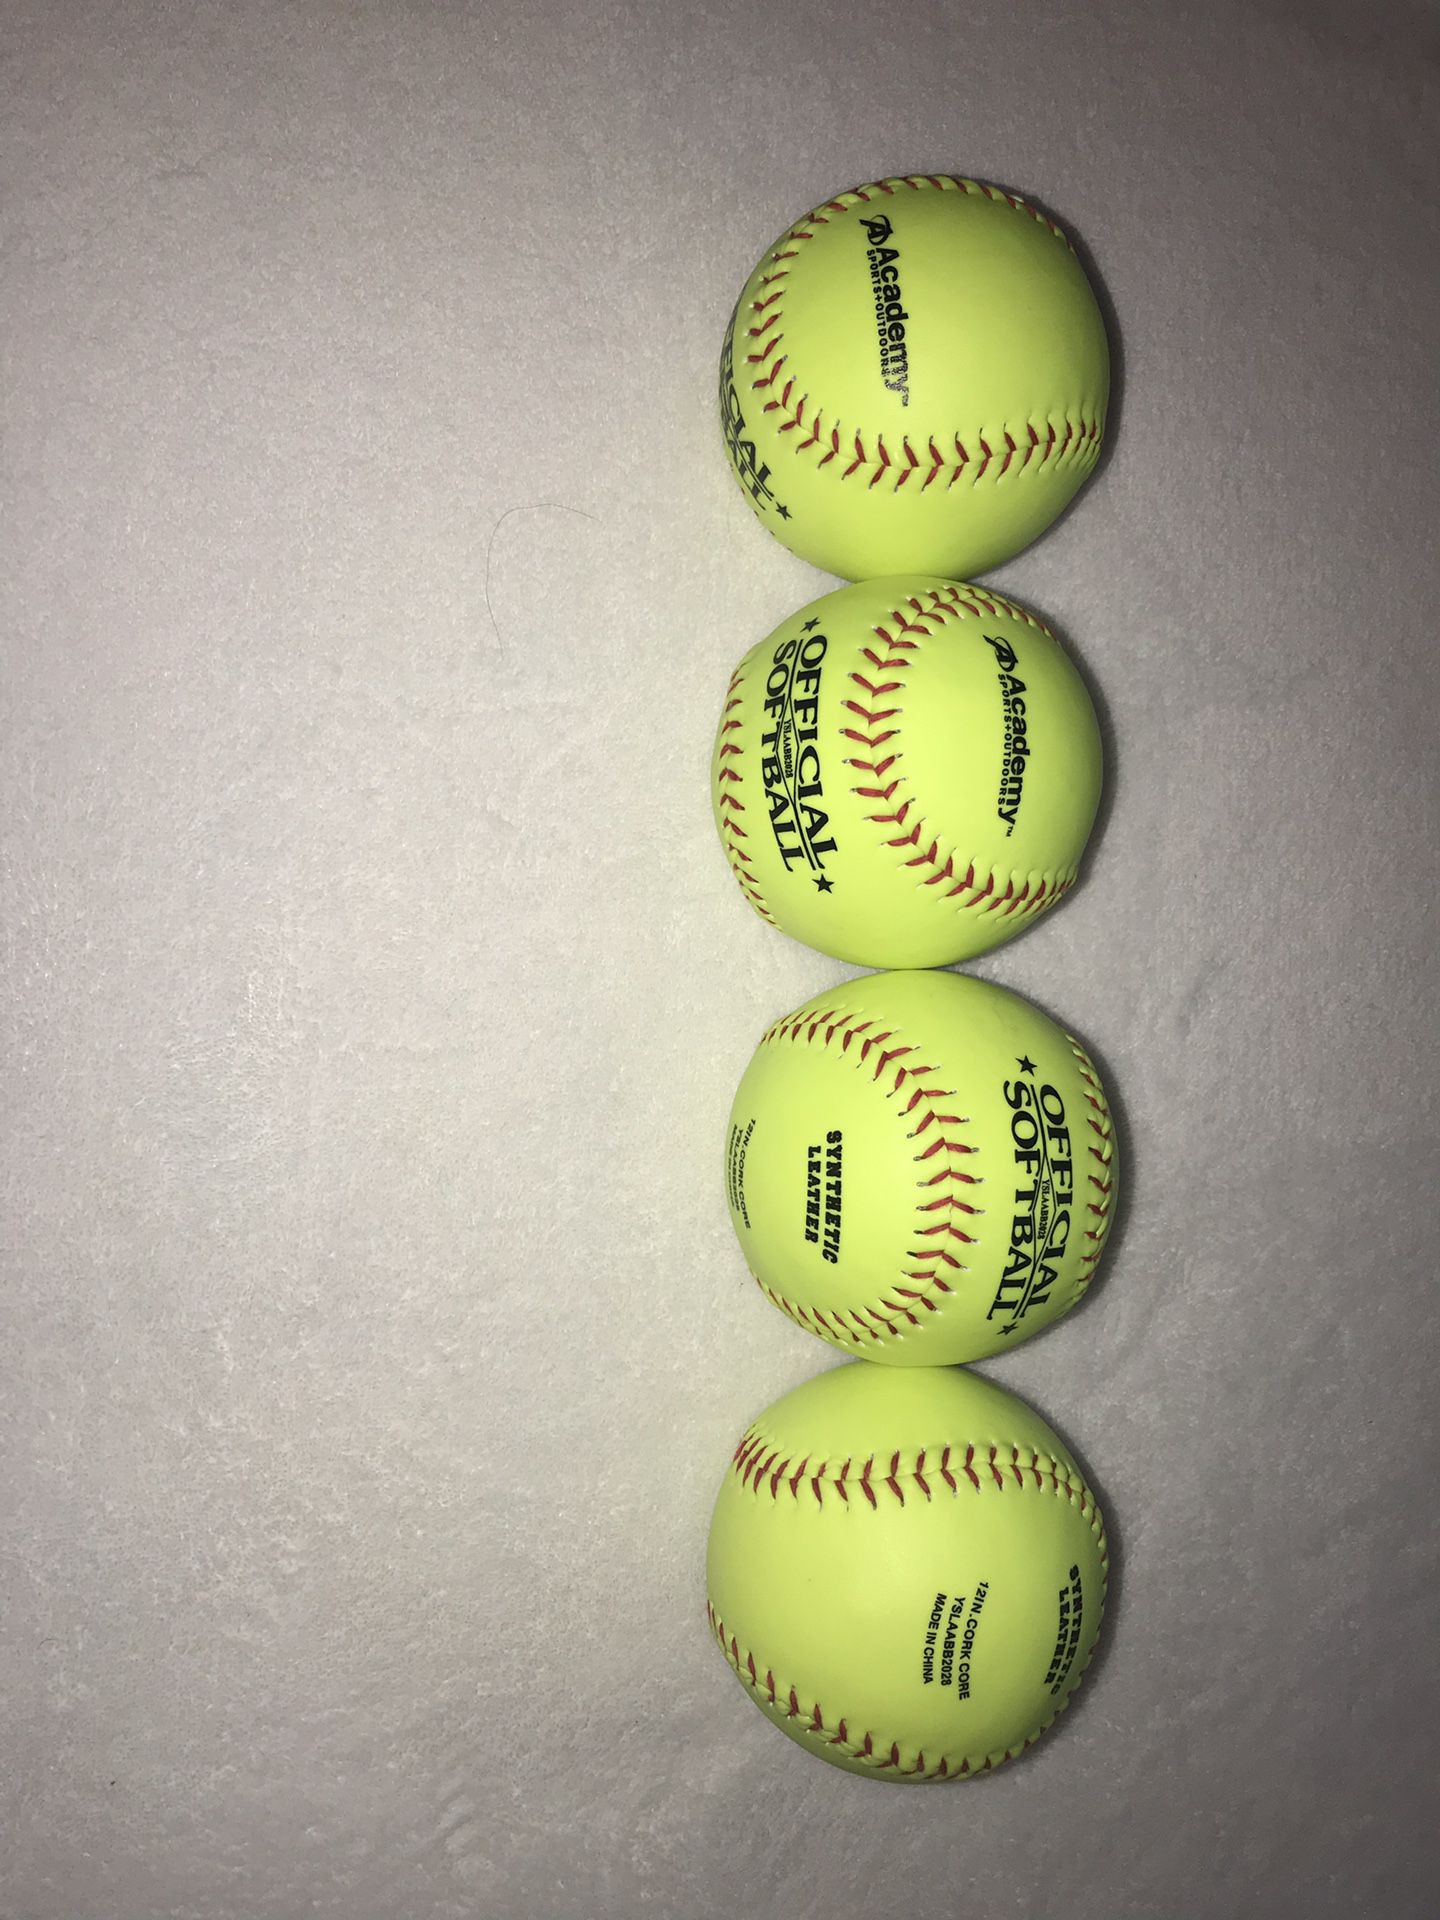 Official 12 inch softballs